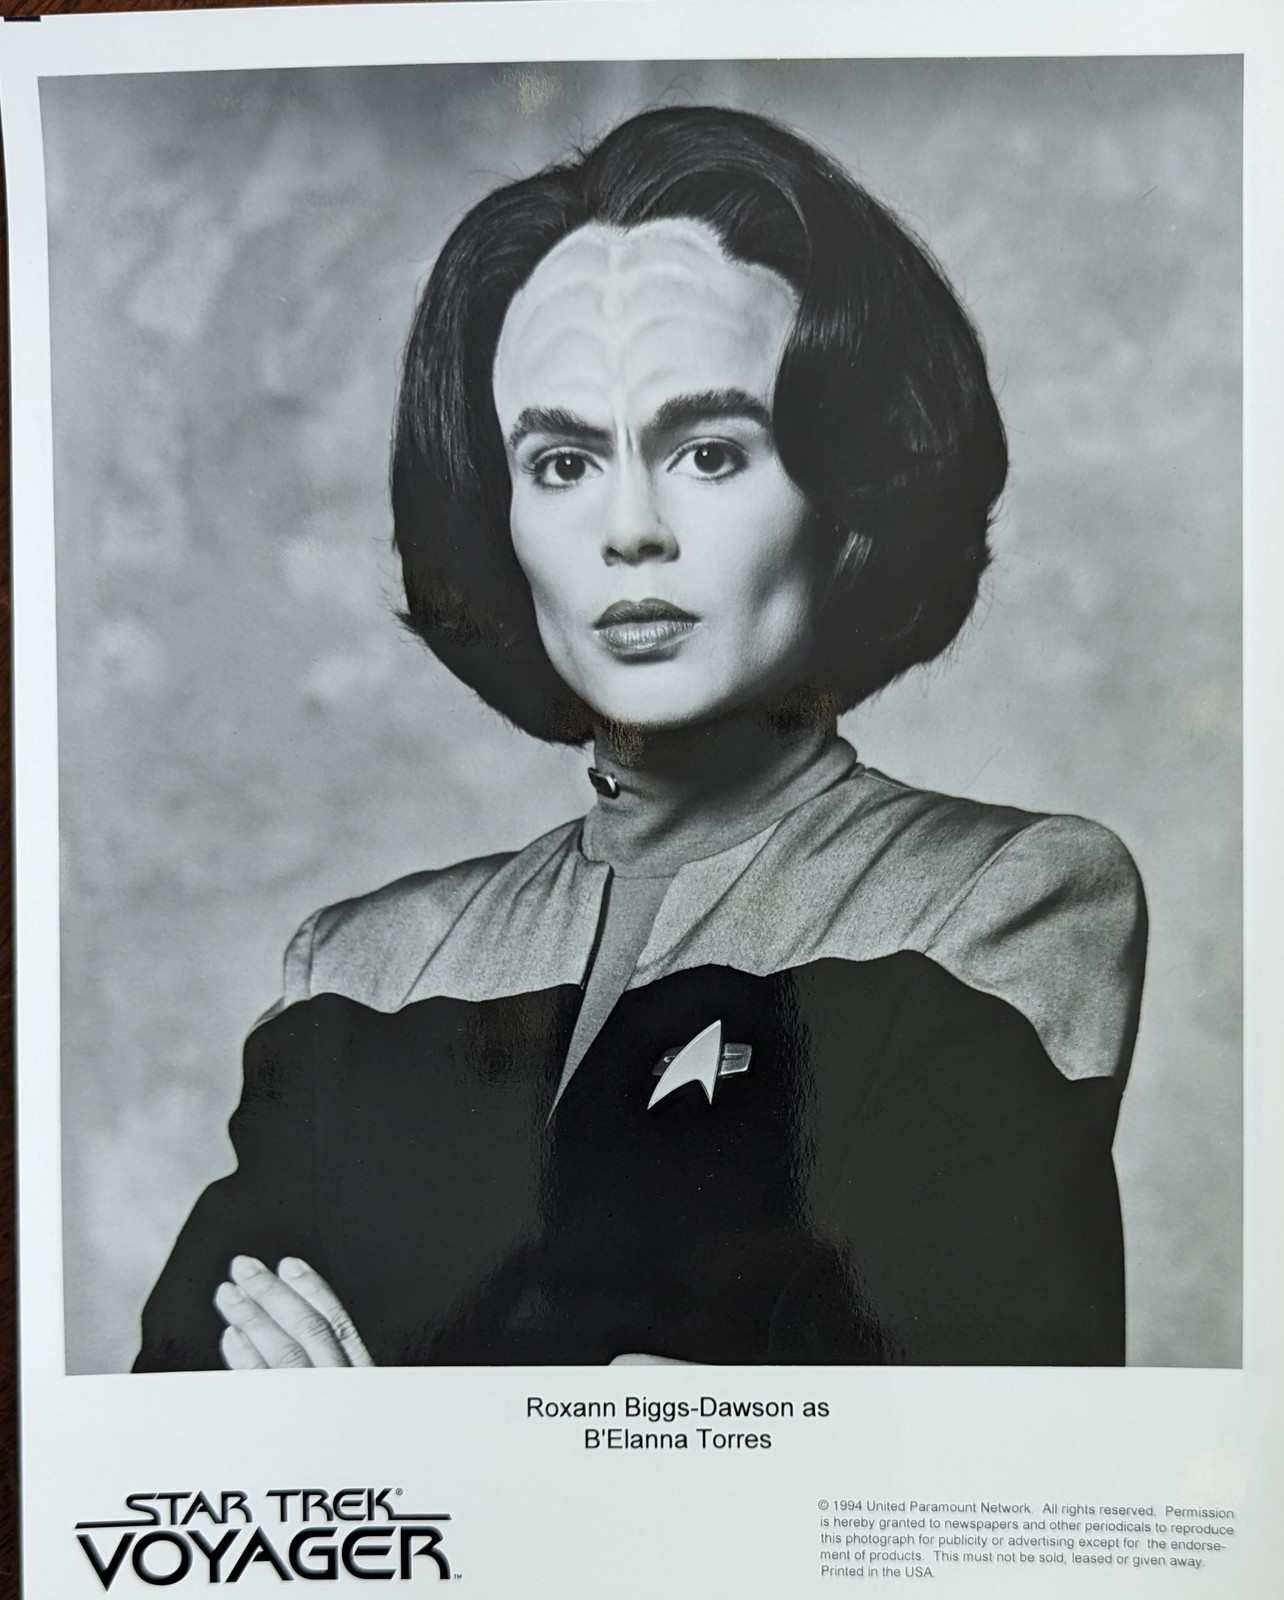 Primary image for Star Trek Voyager Roxann Biggs-Dawson as B'Elanna Torres 10x8 1994 Press Photo 